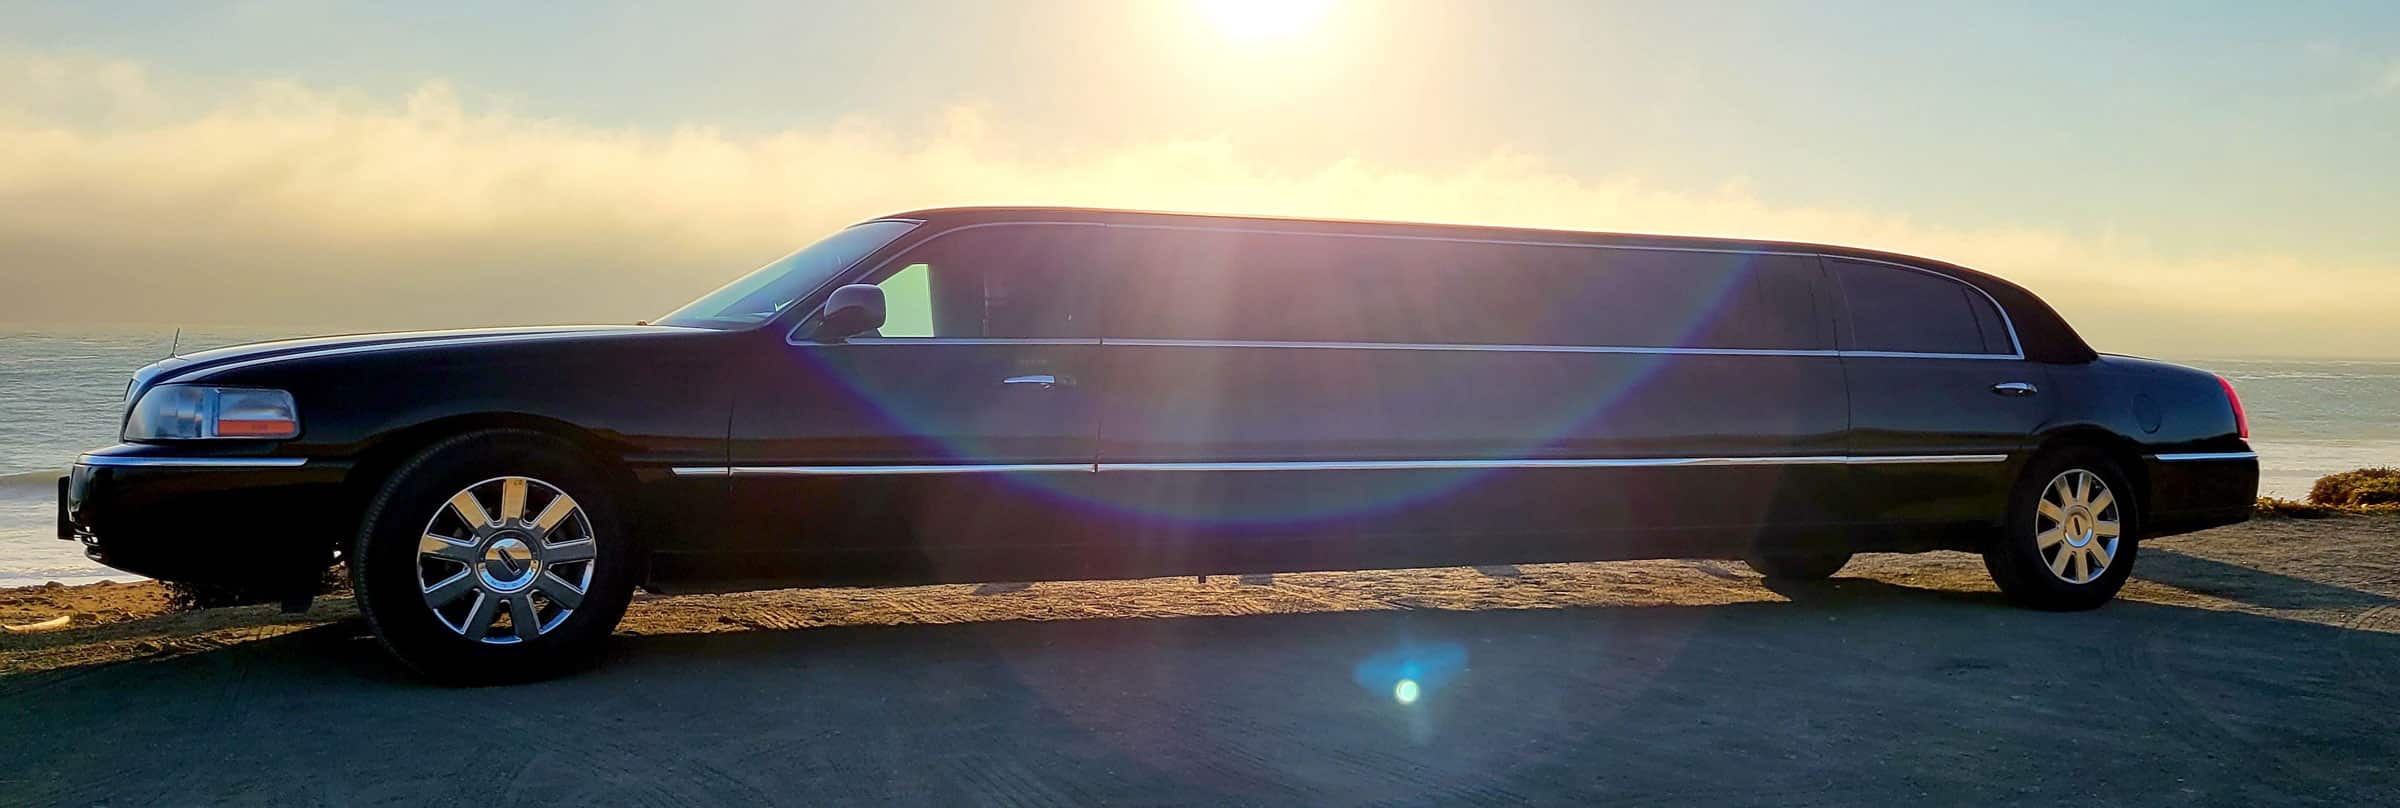 stretch limousine at sunset